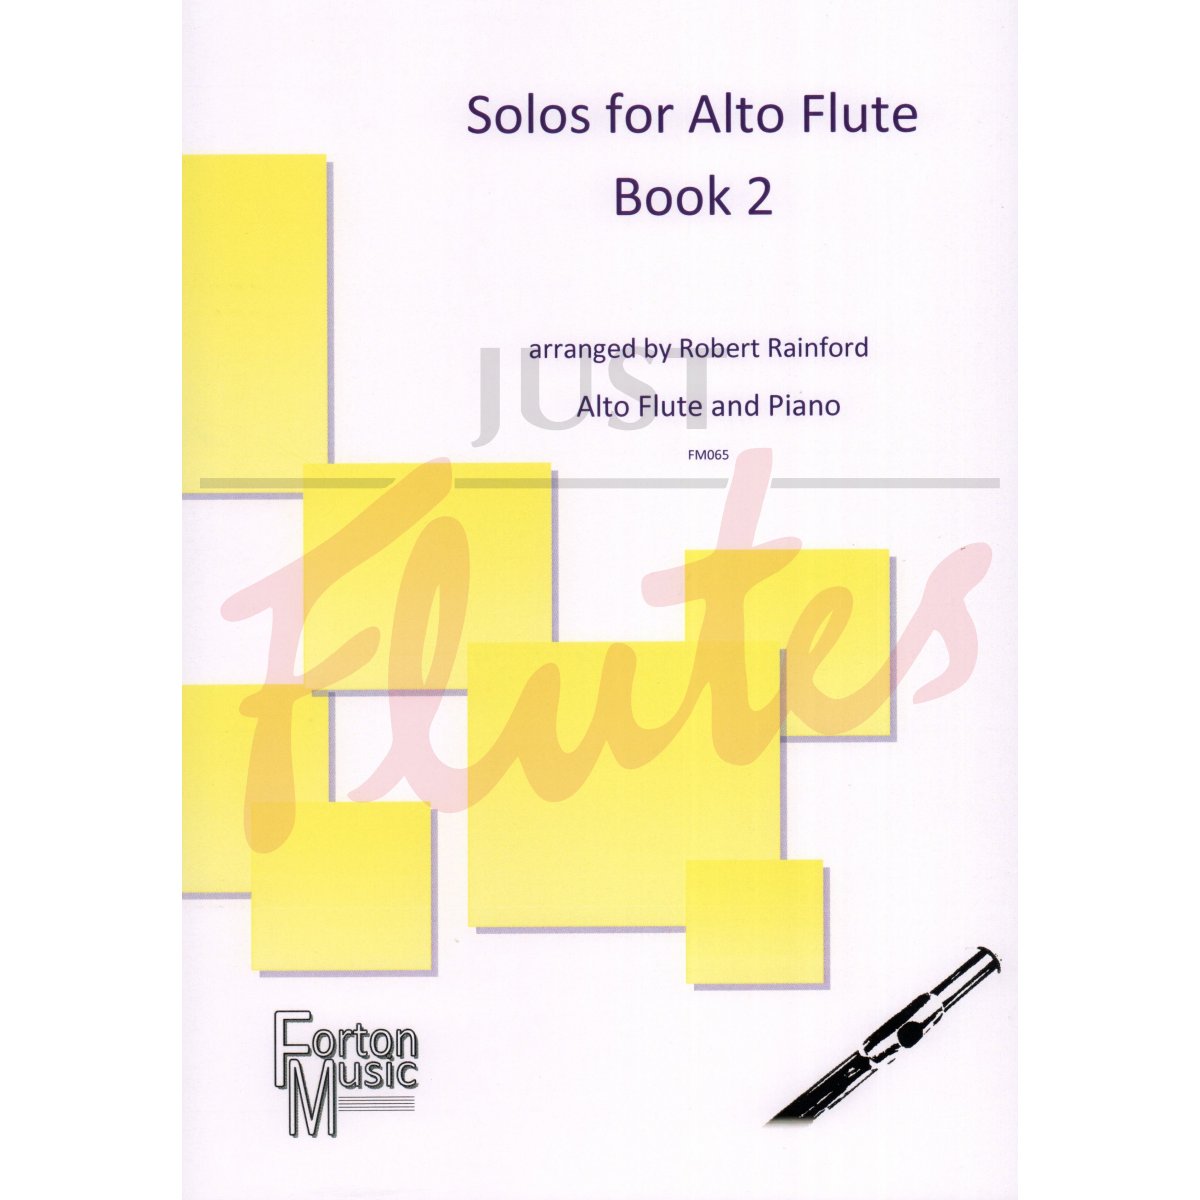 Solos for Alto Flute Book 2, with Piano Accompaniment